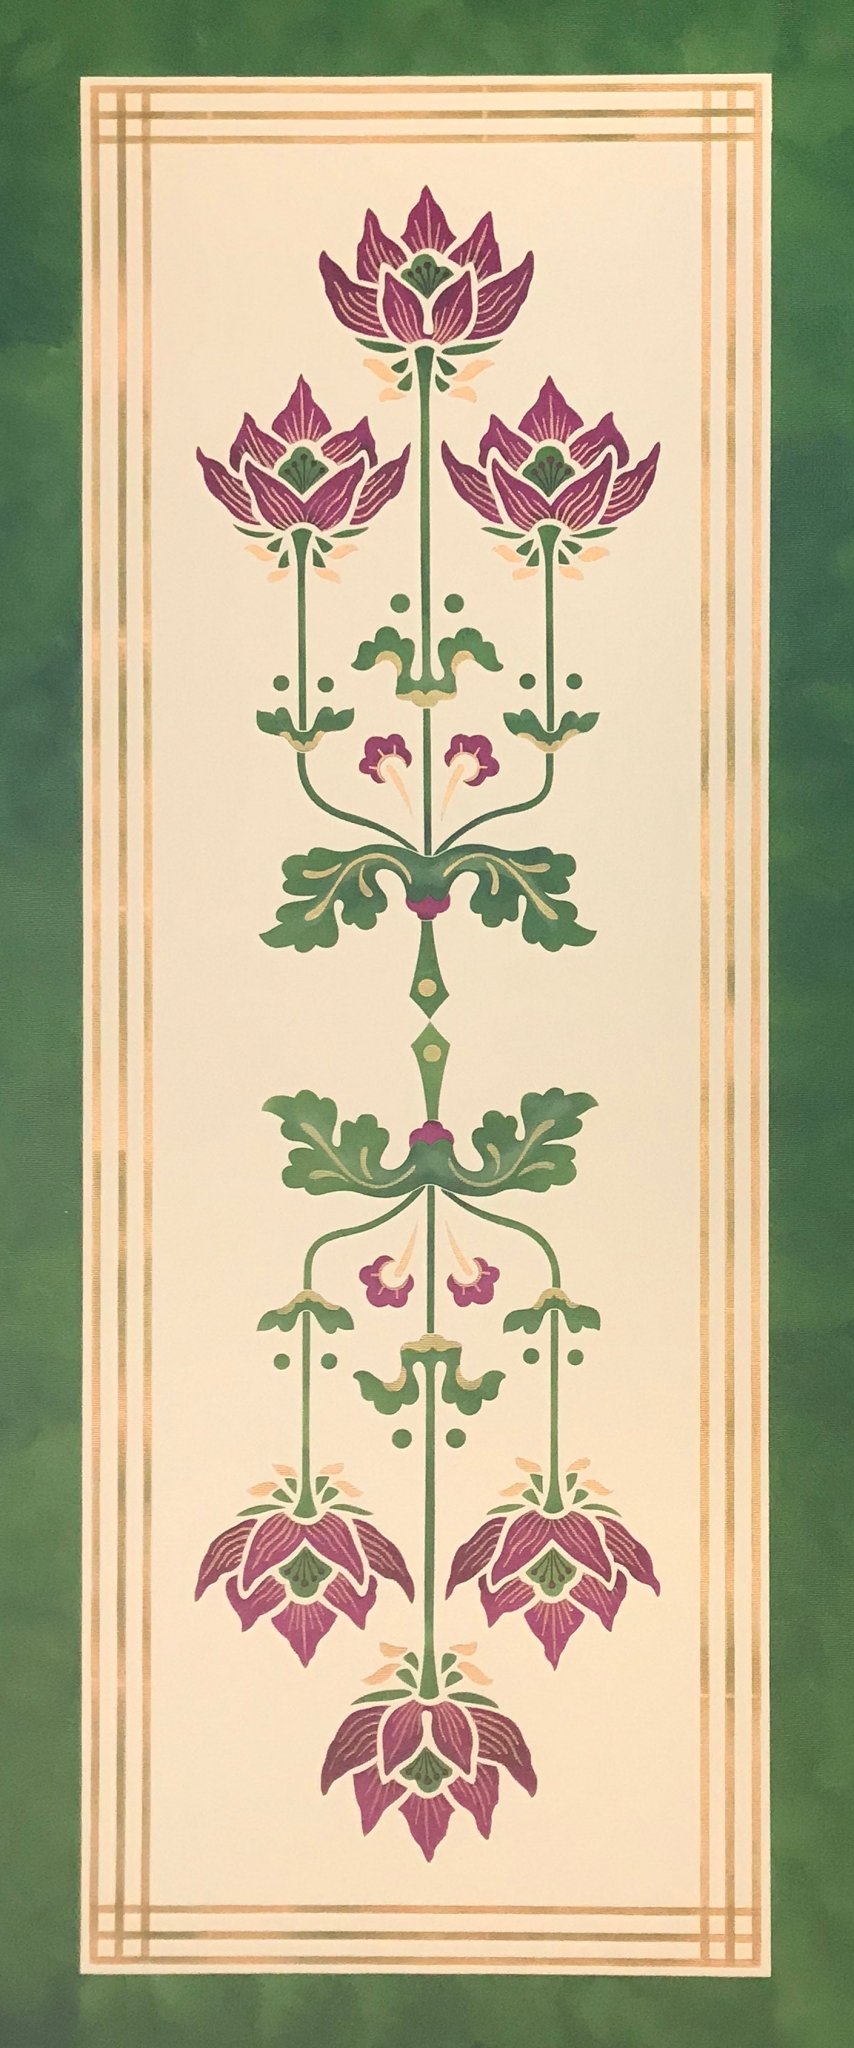 Full image of this floorcloth based on Christopher Dresser's Poppy motif from "Studies in Design" c. 1875.